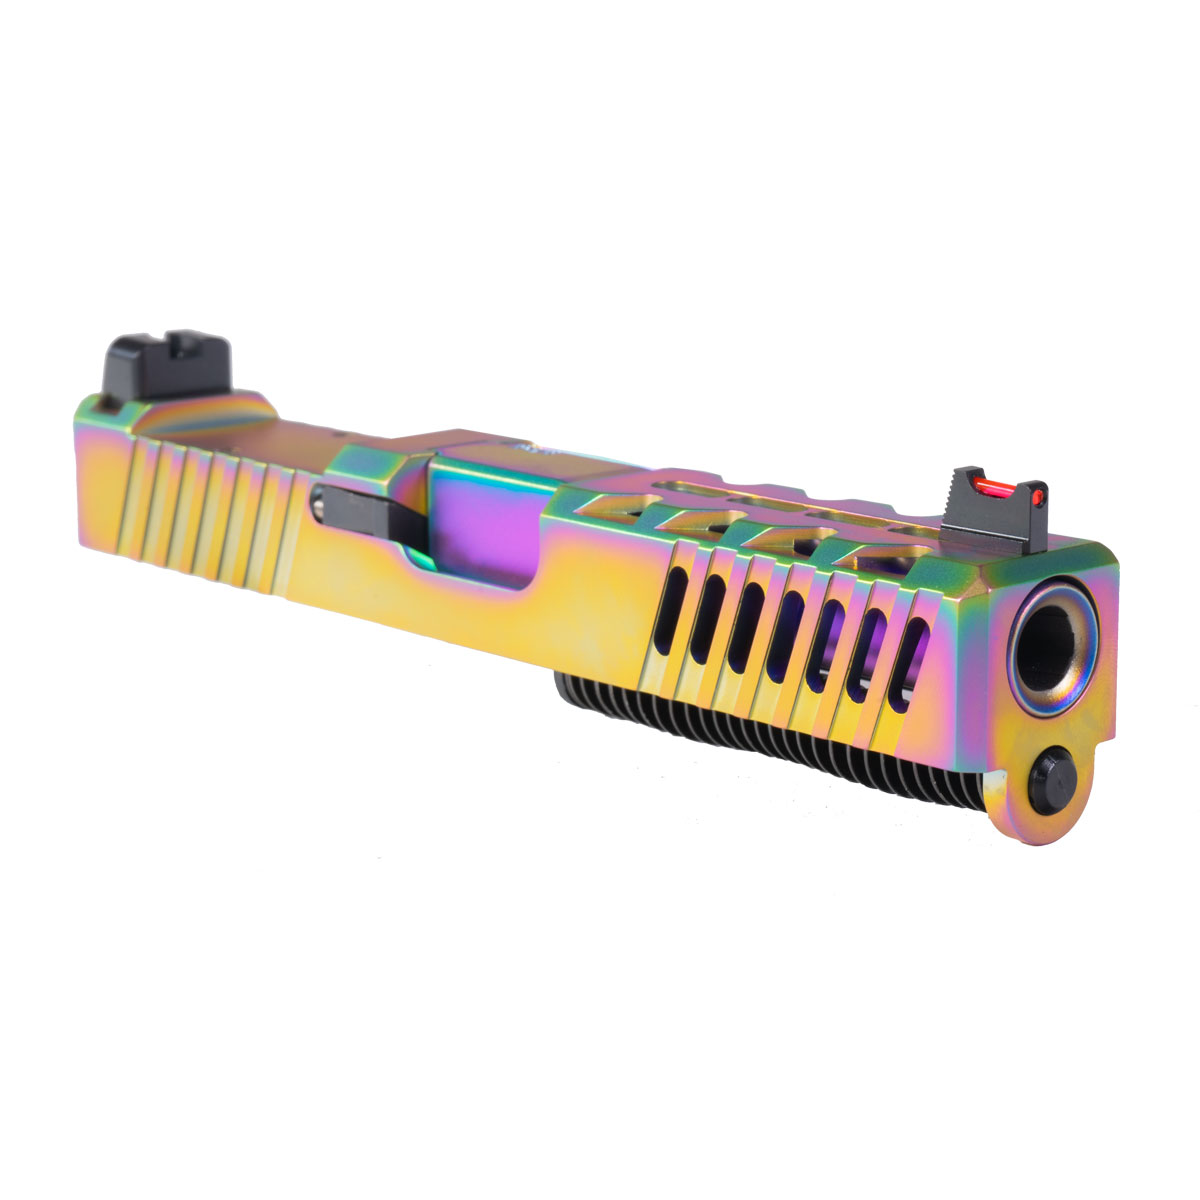 DDS 'Polychrome Pursuit' 9mm Complete Slide Kit - Glock 19 Gen 1-2 Compatible